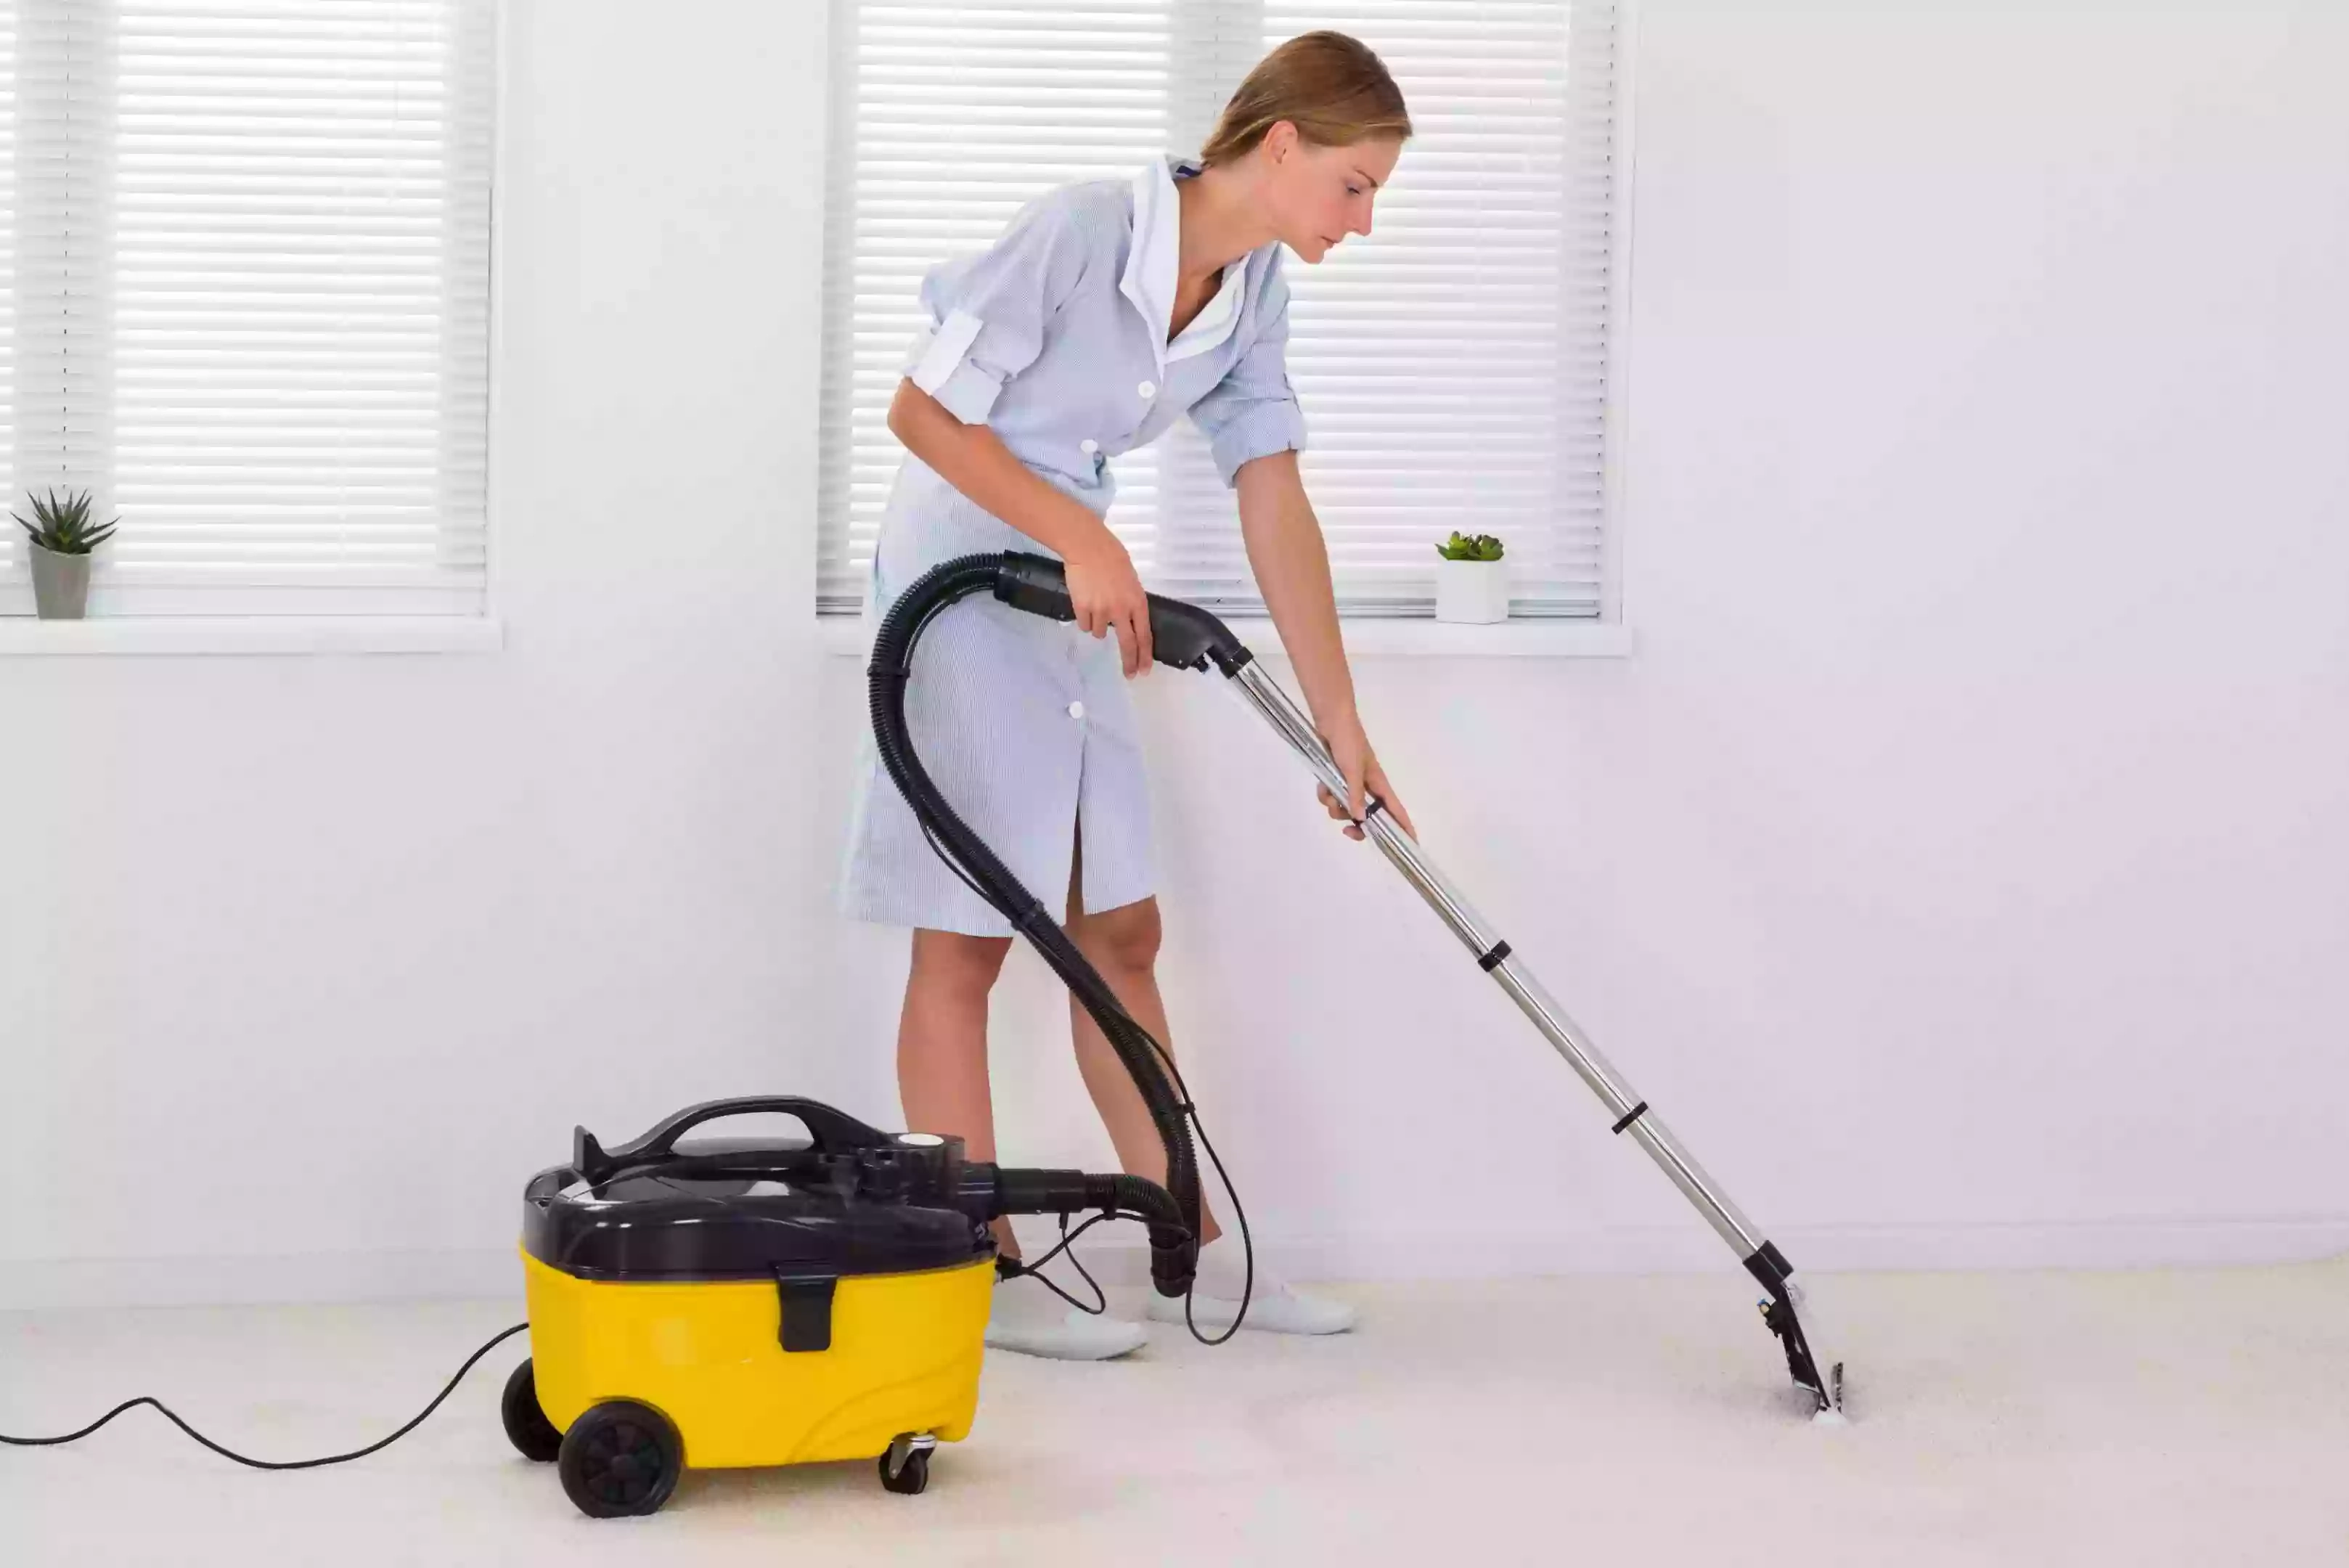 Professional Carpet Cleaning UK